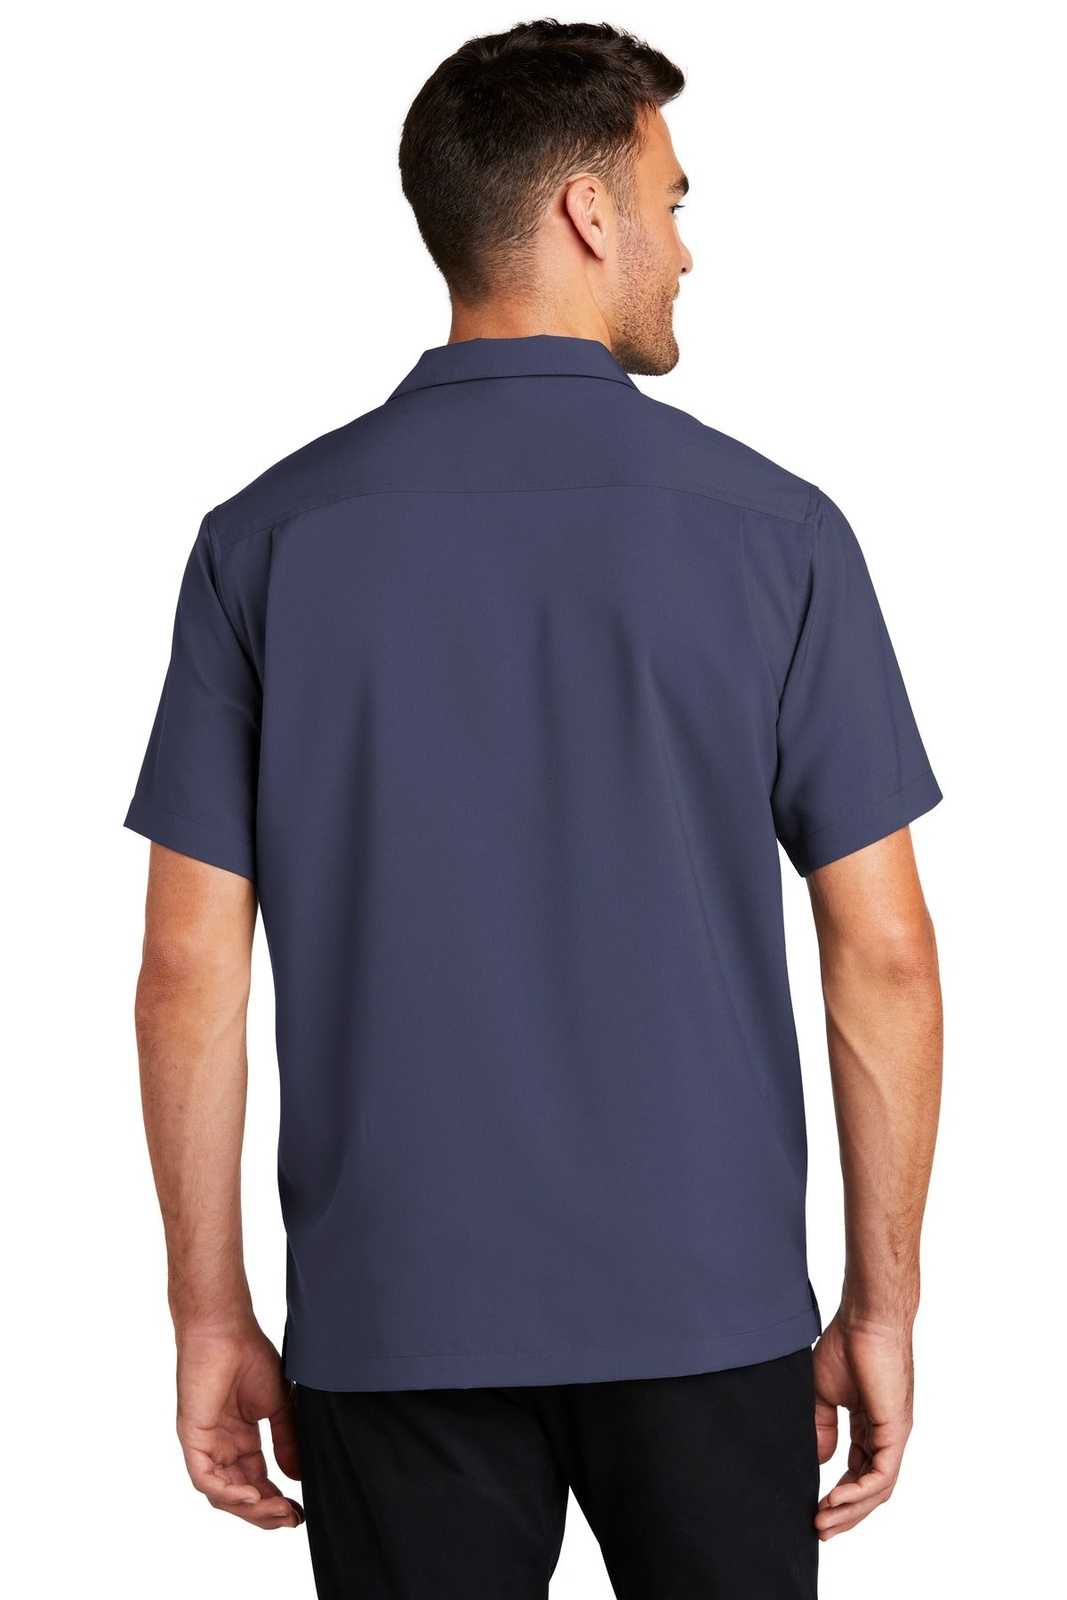 Port Authority W400 Short Sleeve Performance Staff Shirt - True Navy - HIT a Double - 1